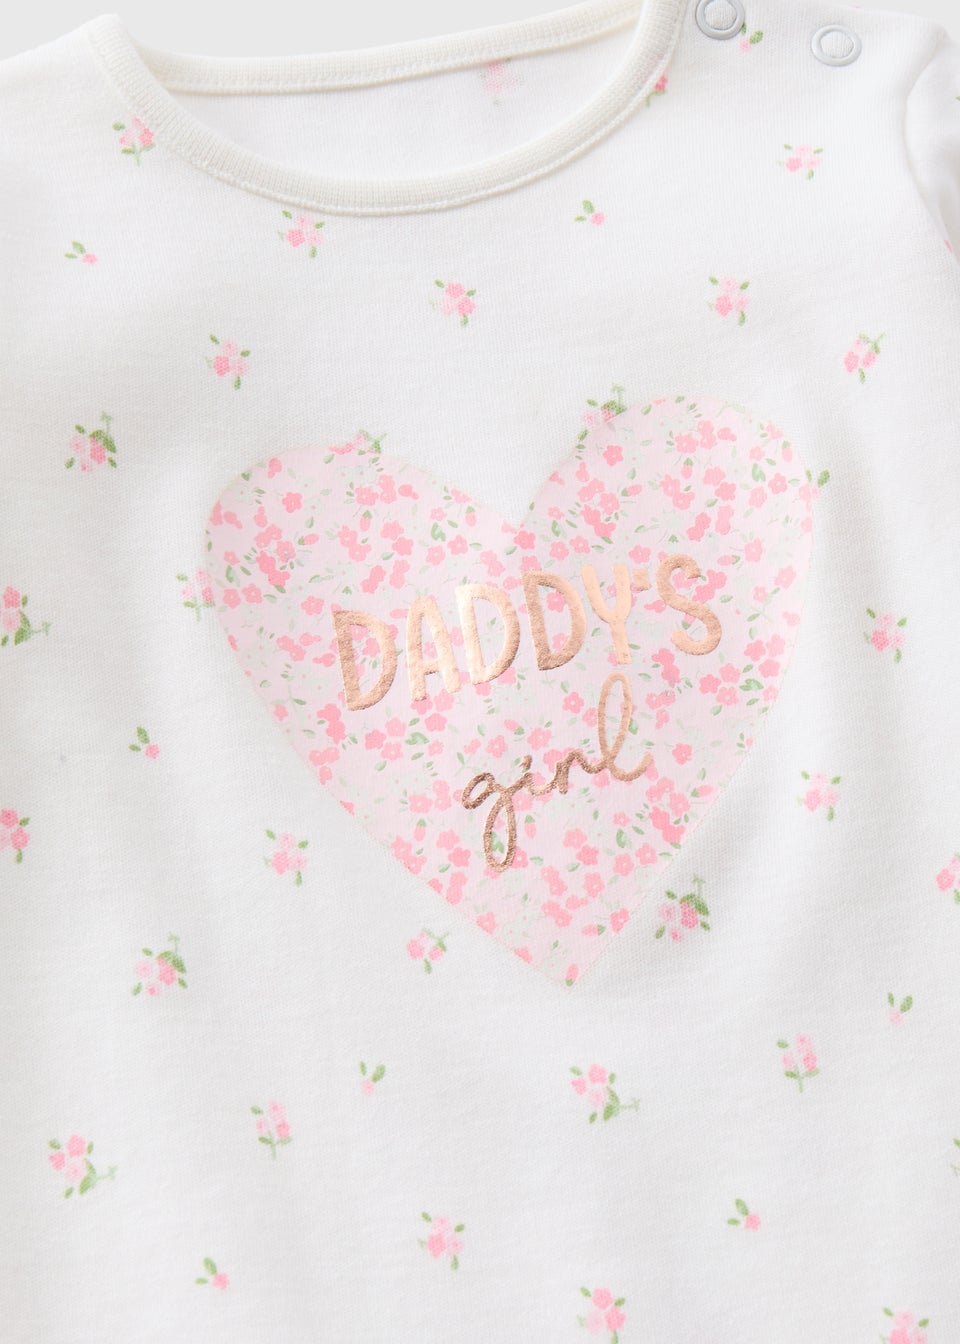 Baby Cream Daddy's Girl Sleepsuit (Tiny Baby-18mths)